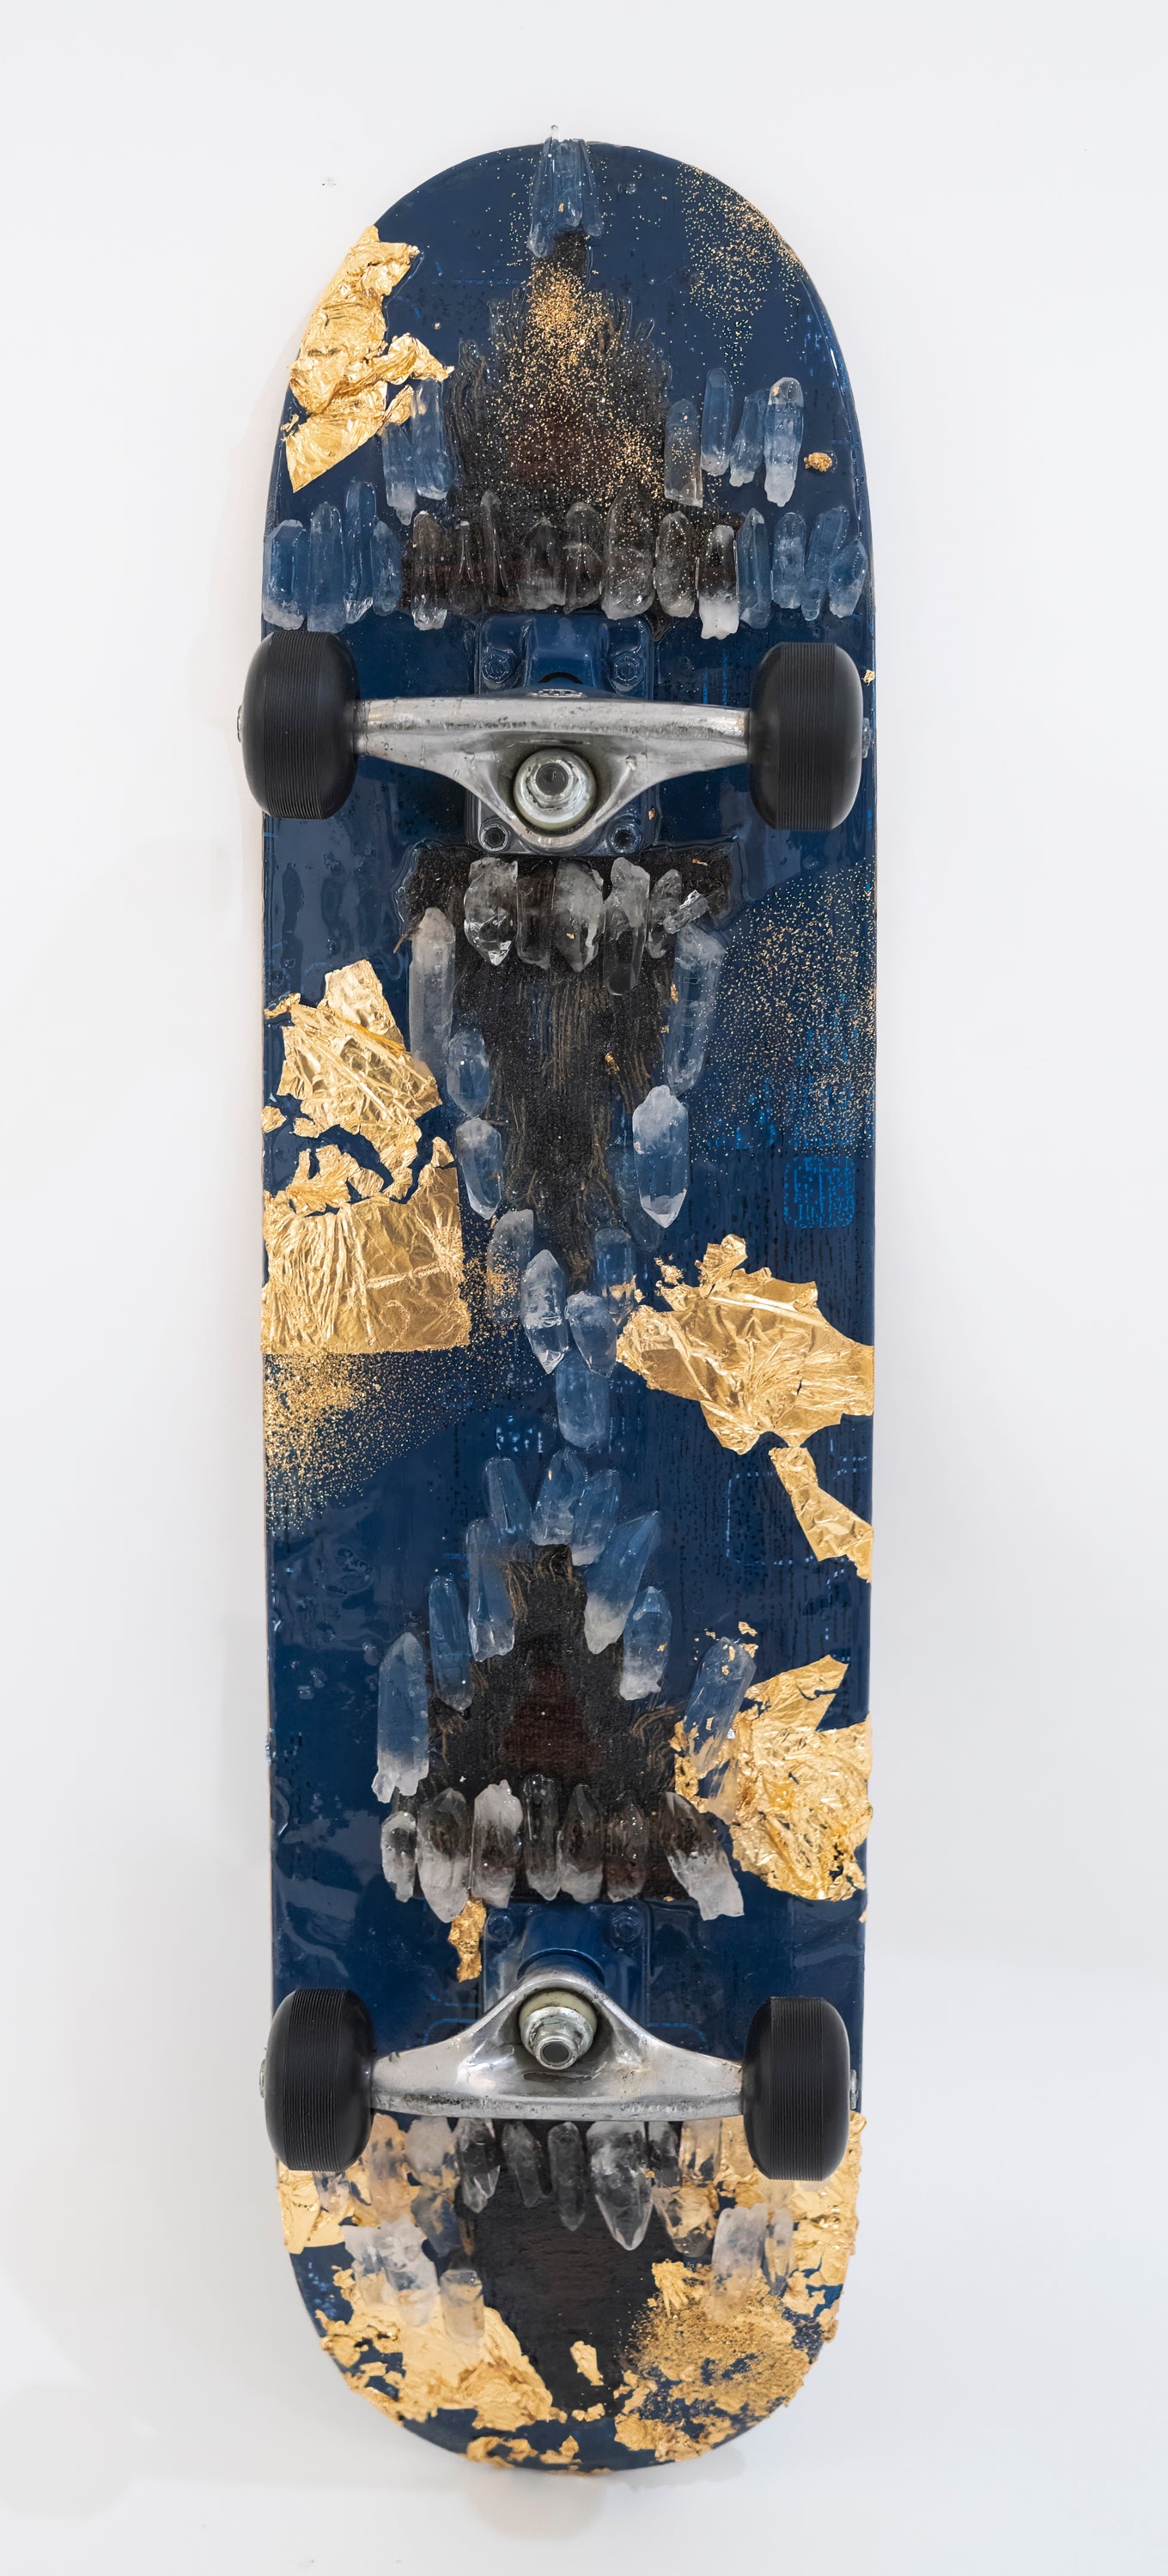 Fine art Collection - skateboard - "Blue Haze"